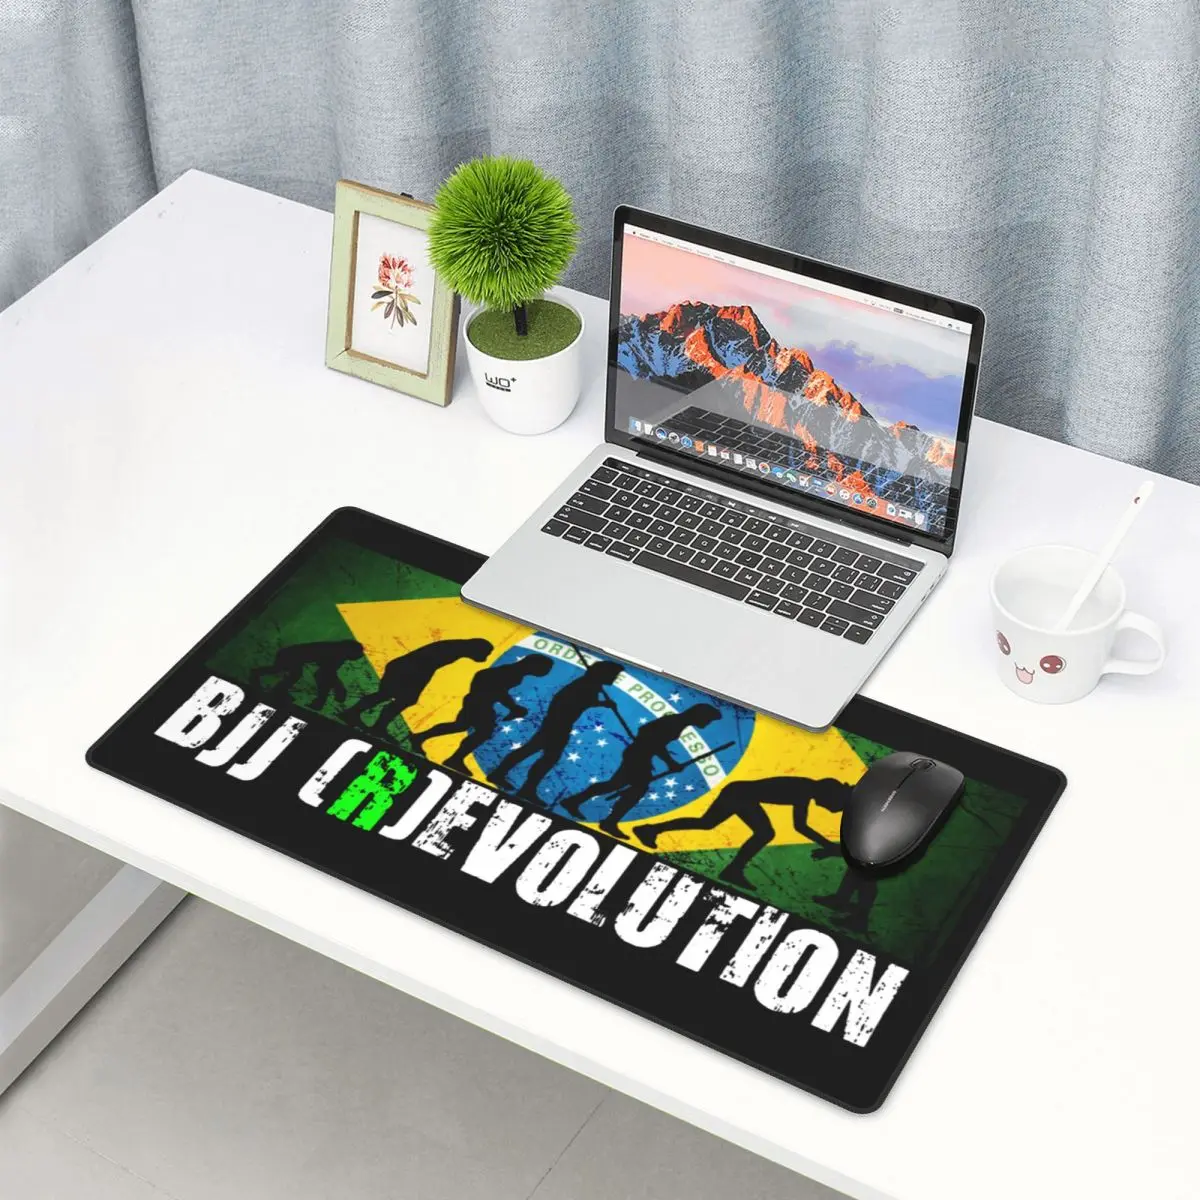 BJJ האבולוציה תרשים Grapplers ברזילאי ג 'יו ג' יטסו המשחק משטח עכבר עכבר המחשב מחצלת 90x40cm הדפסה Mousepad עבור גיימרים